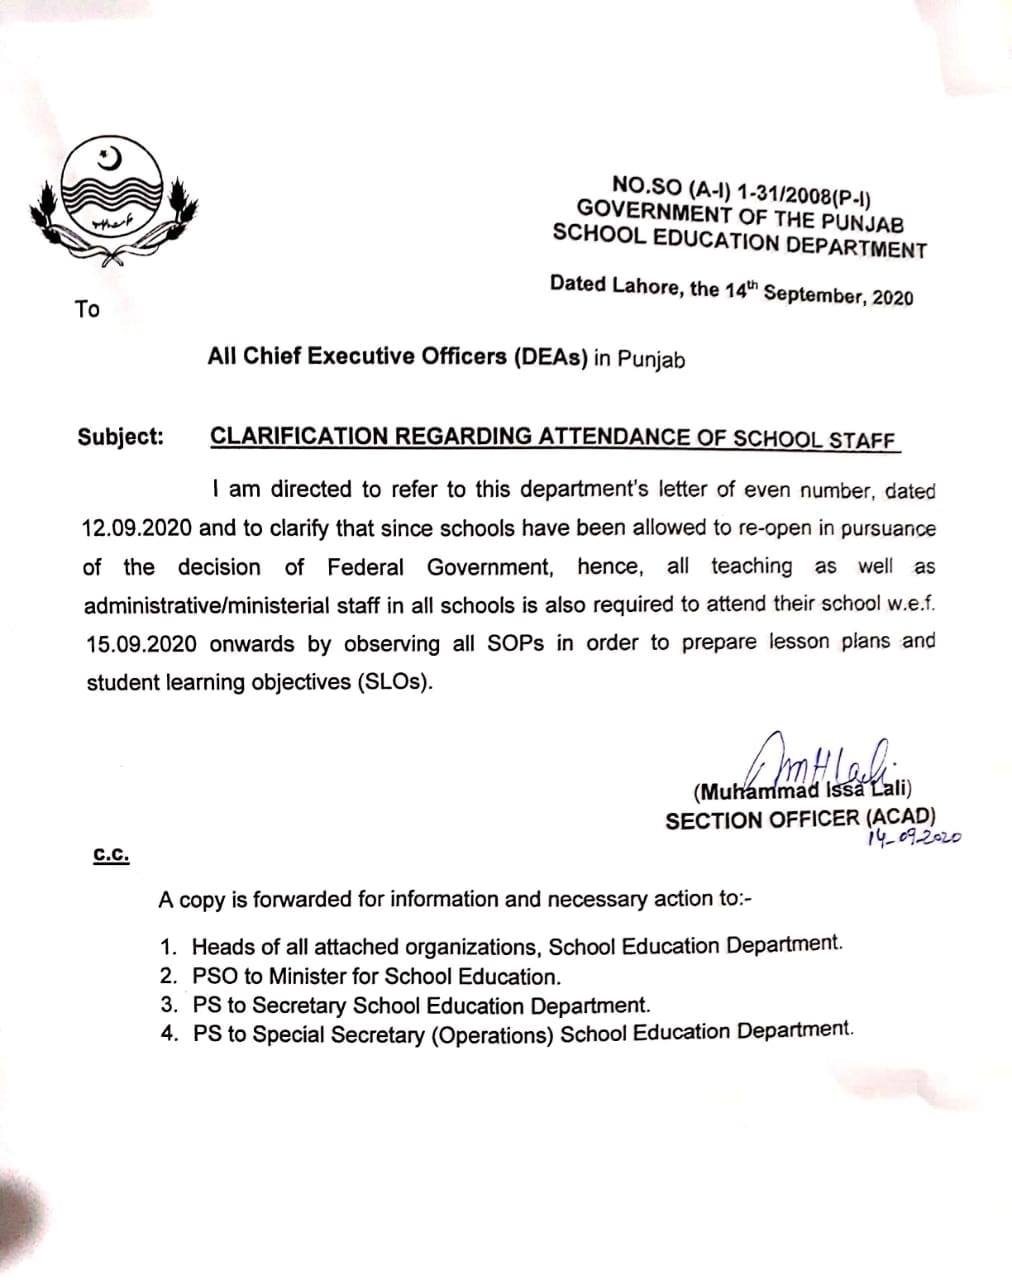 Clarification Regarding Attendance of School Staff